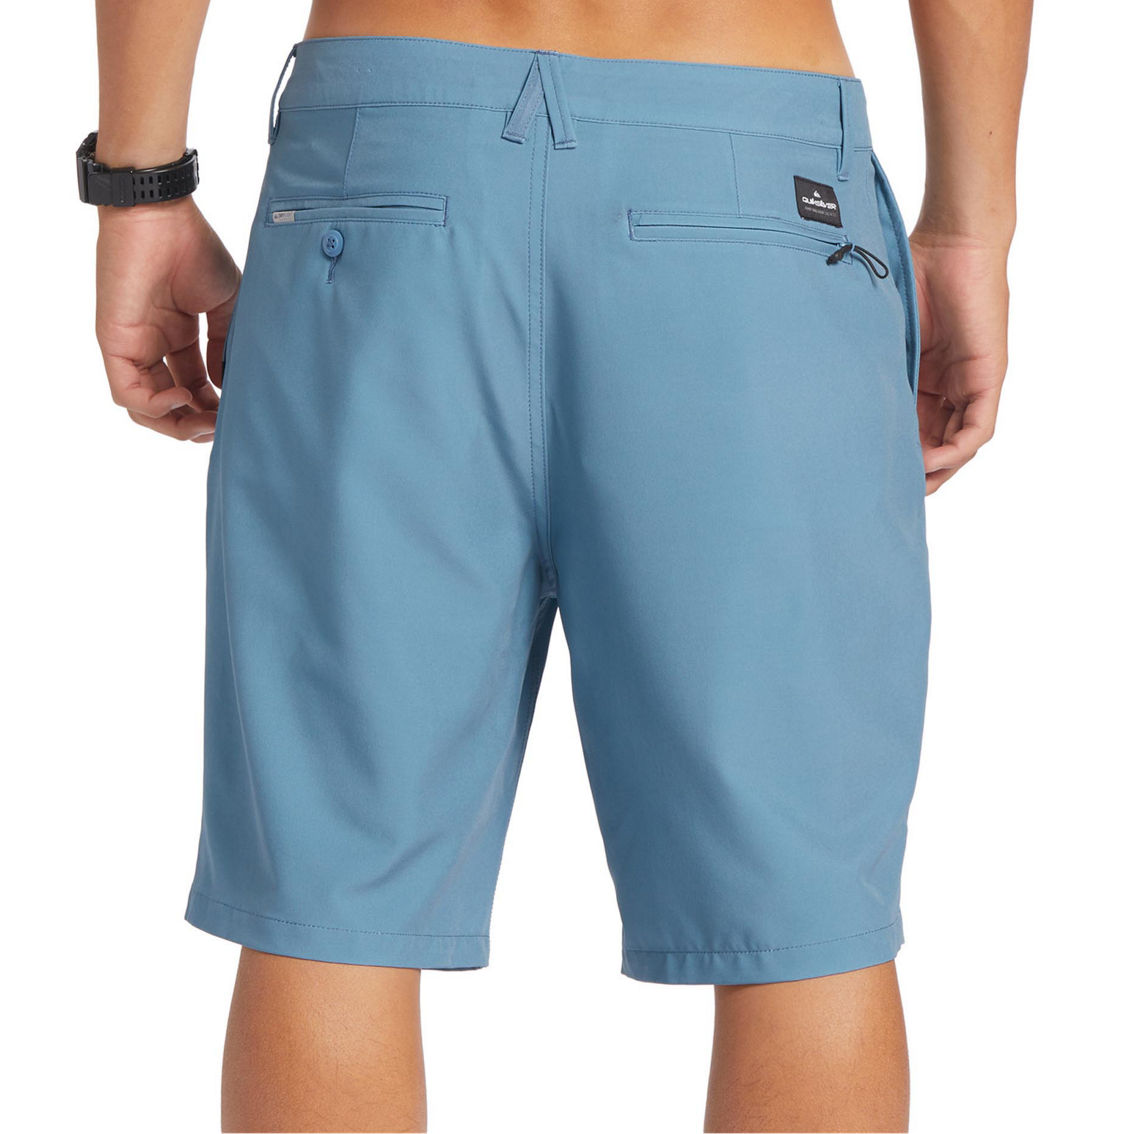 Quiksilver Ocean Union Amphibian 20 Hybrid Shorts - Image 2 of 6